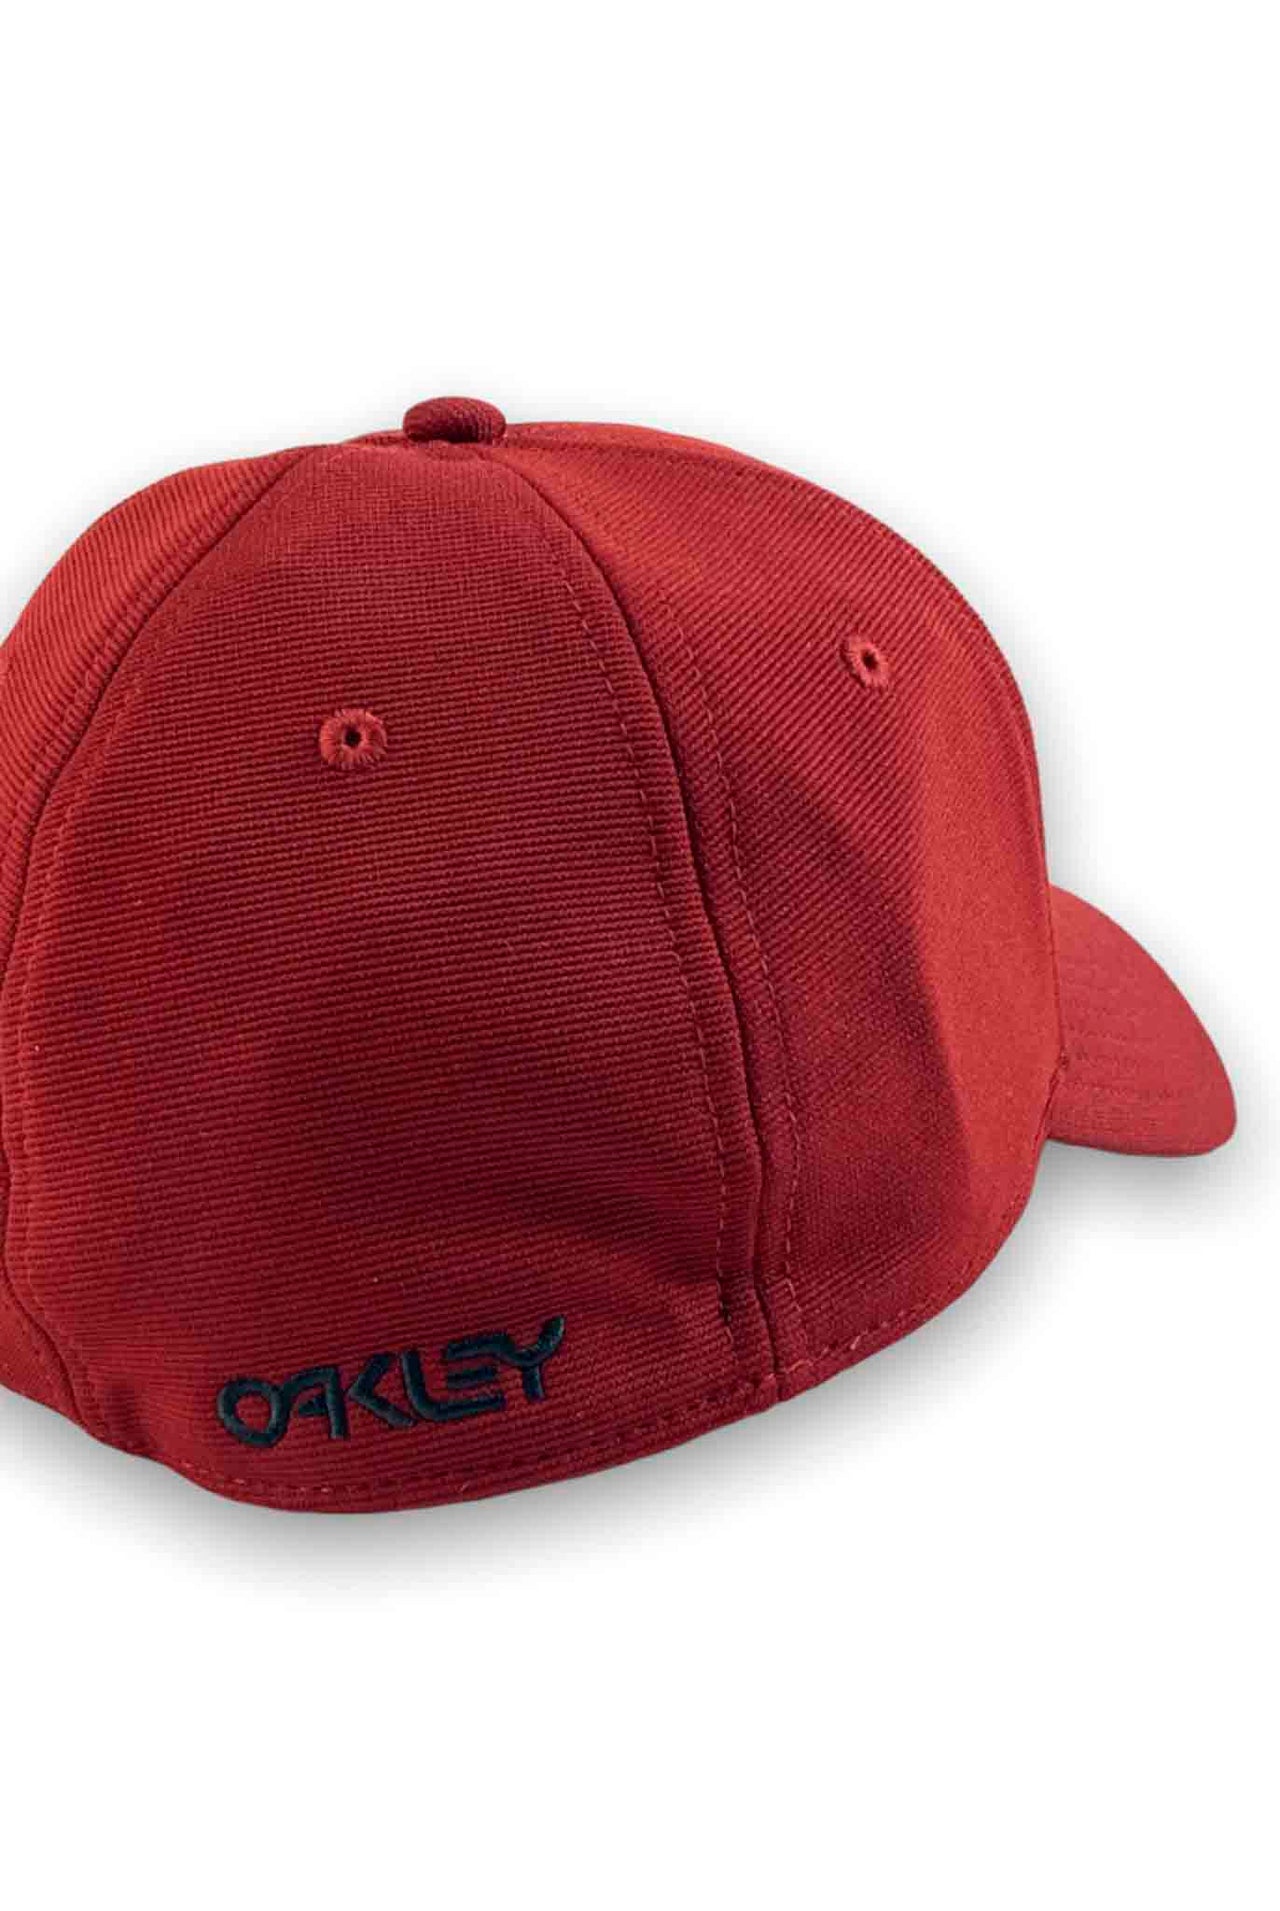 Gorra Oakley Iron Red Stretch Metallic Hat - 6 Panel